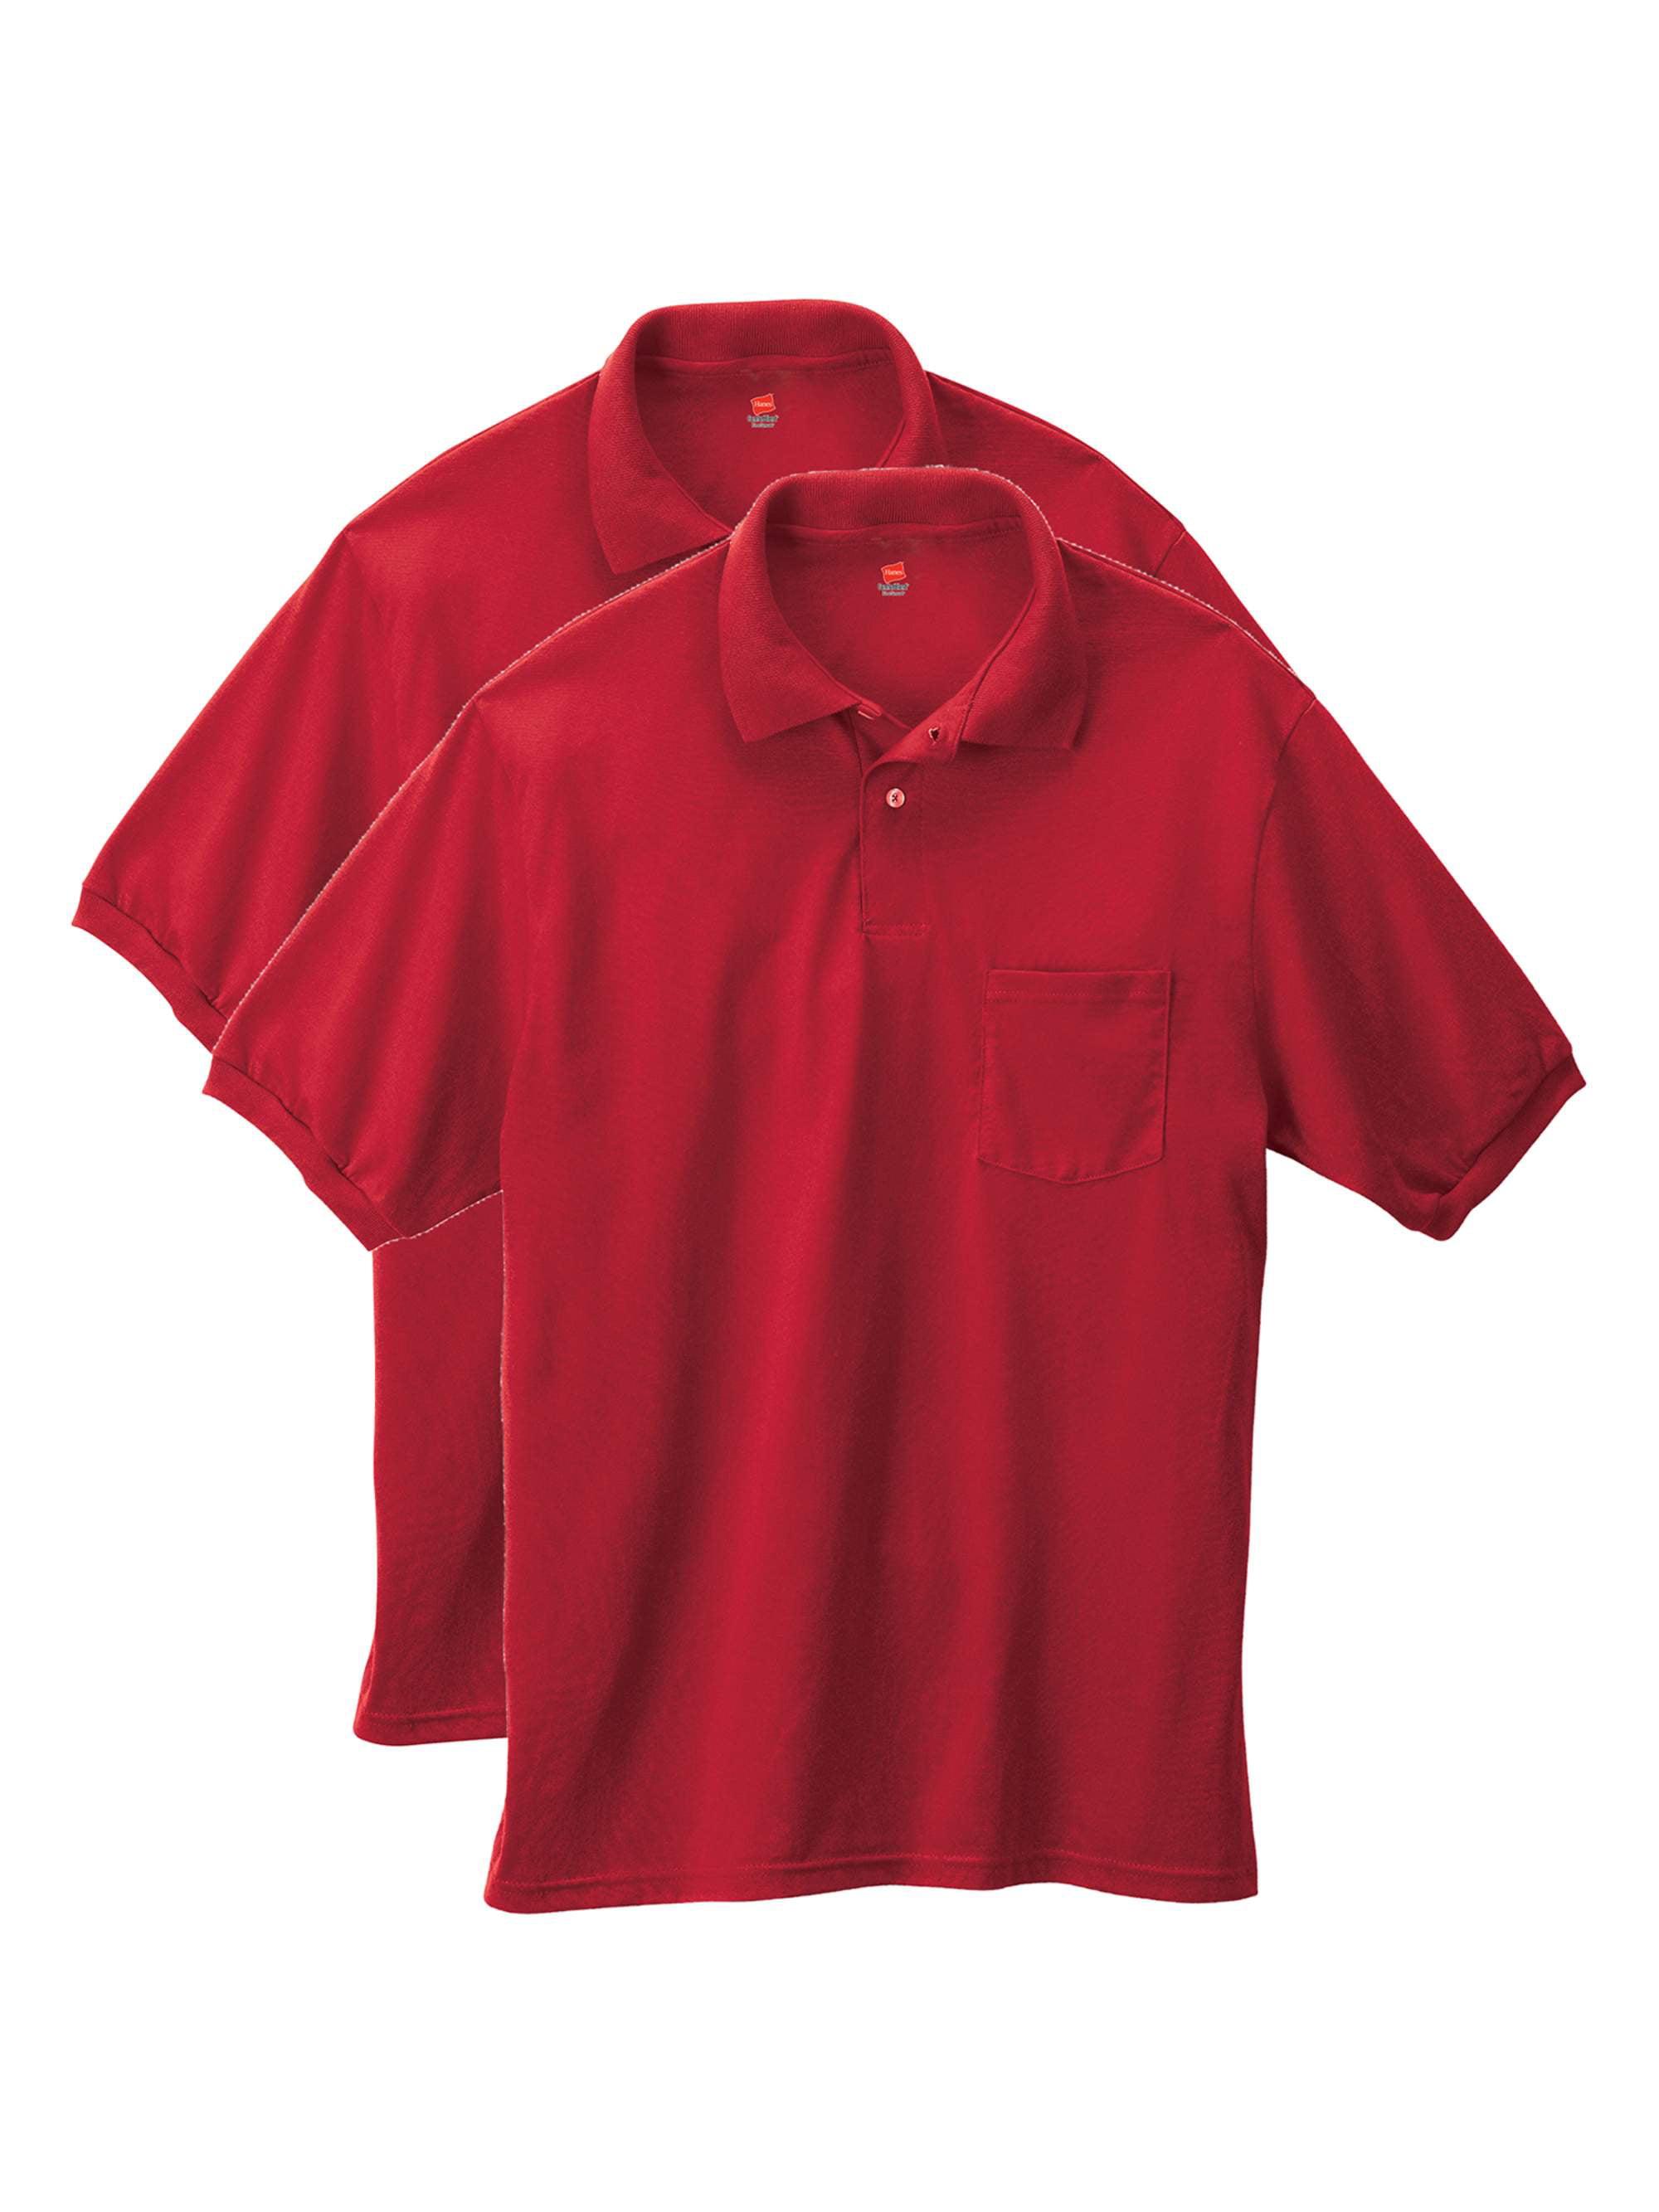 Hanes Men's Short Sleeve Jersey Pocket Polo Pack of 2